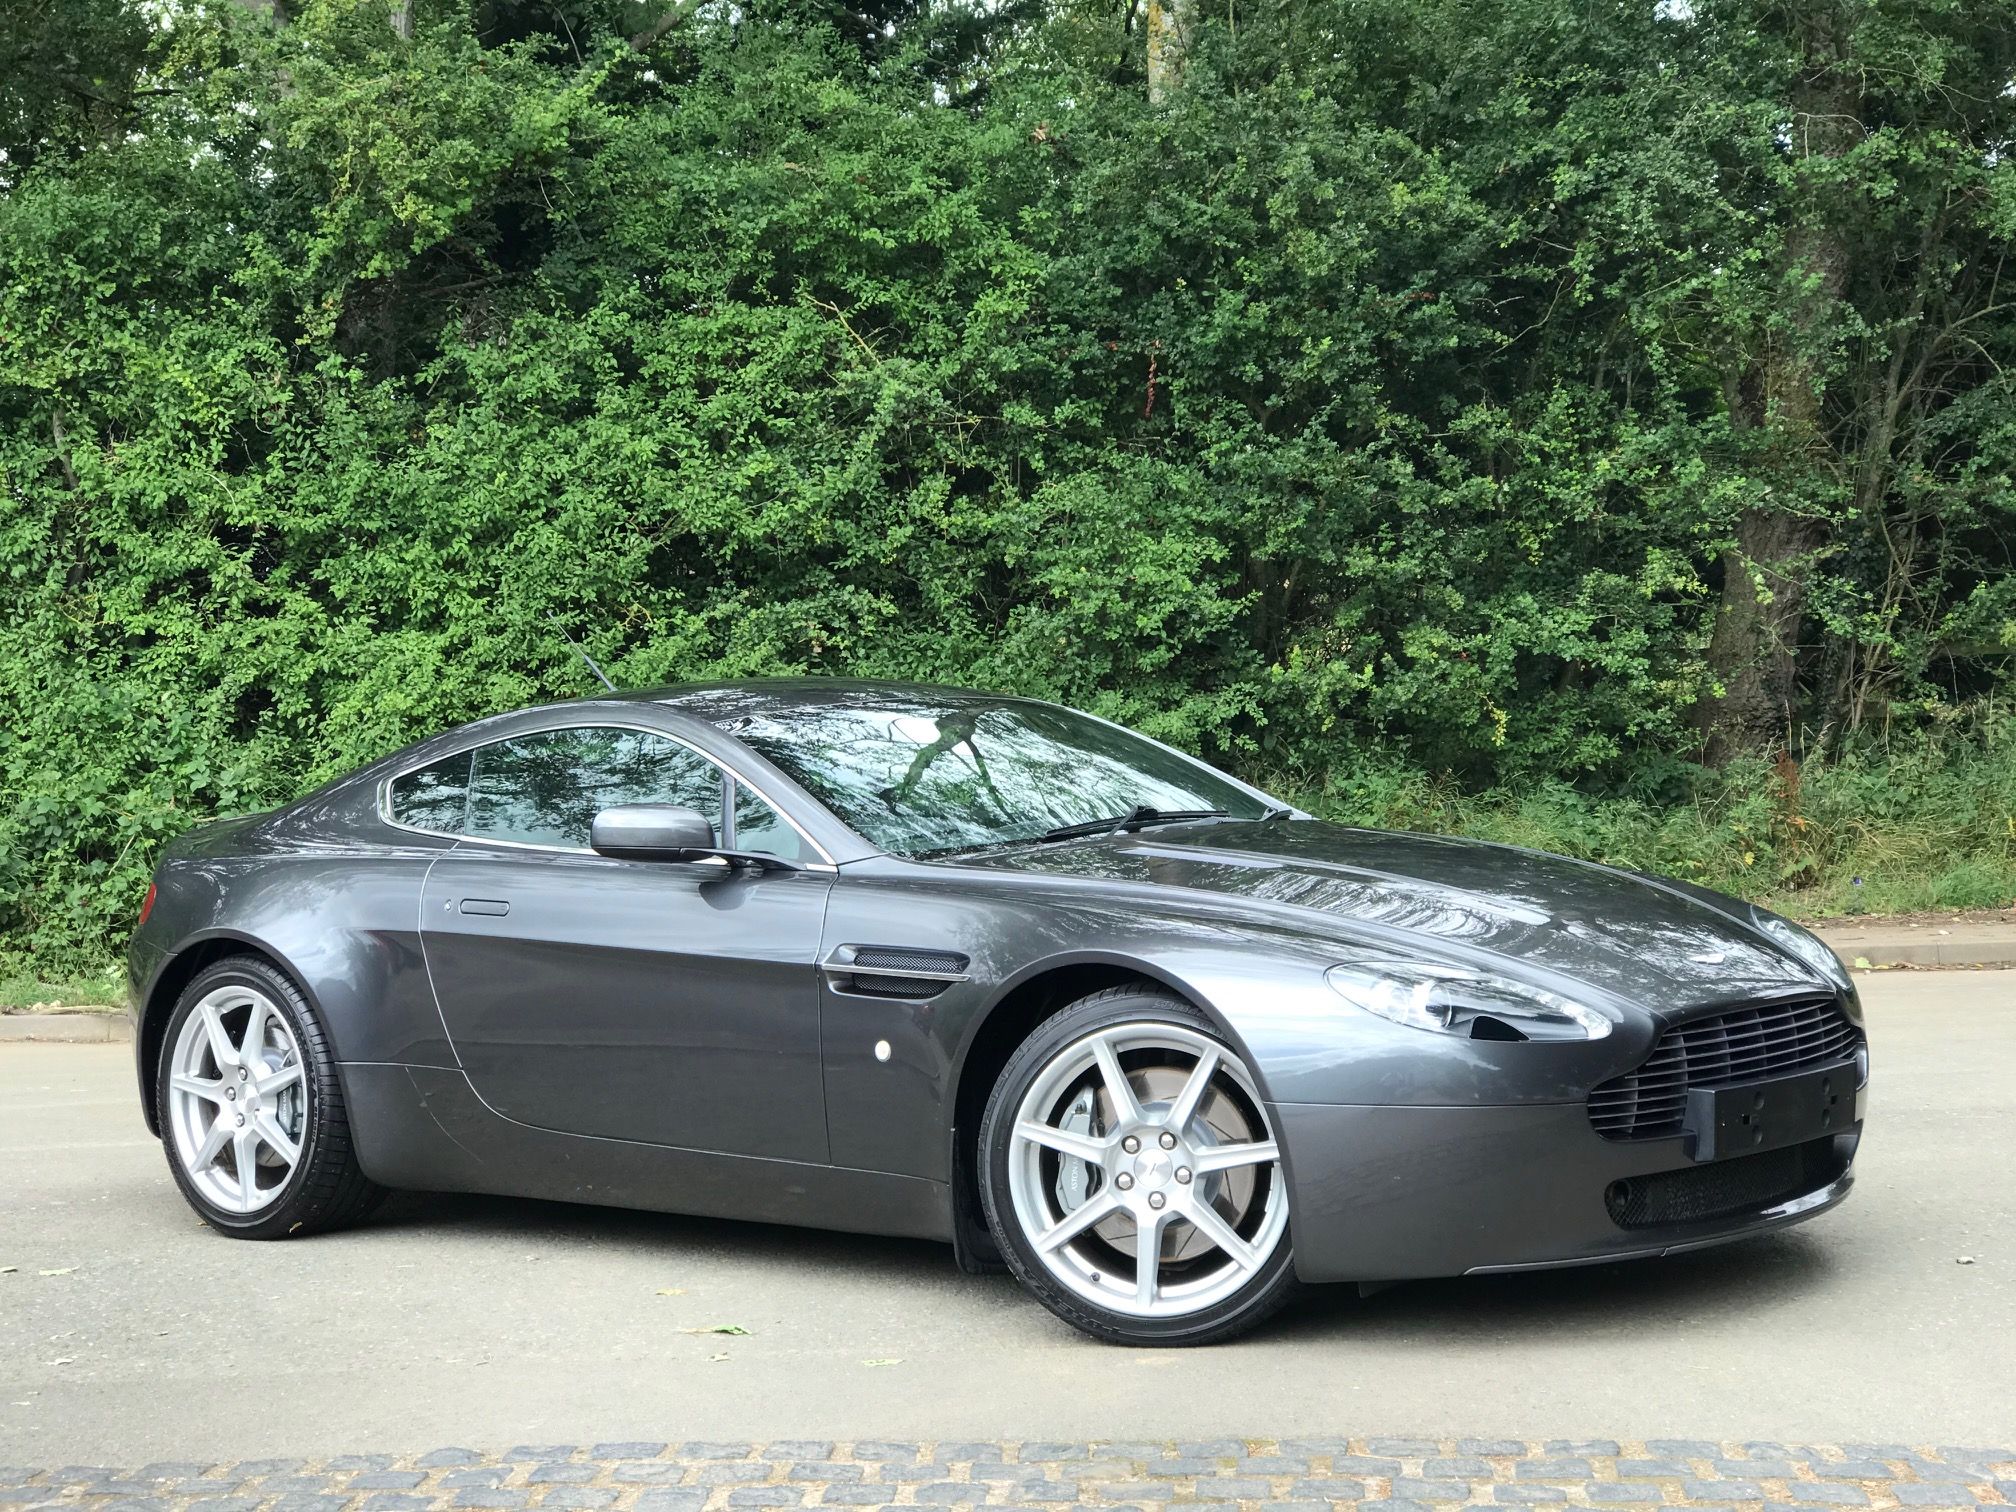 Used Aston Martin V8 vantage for sale